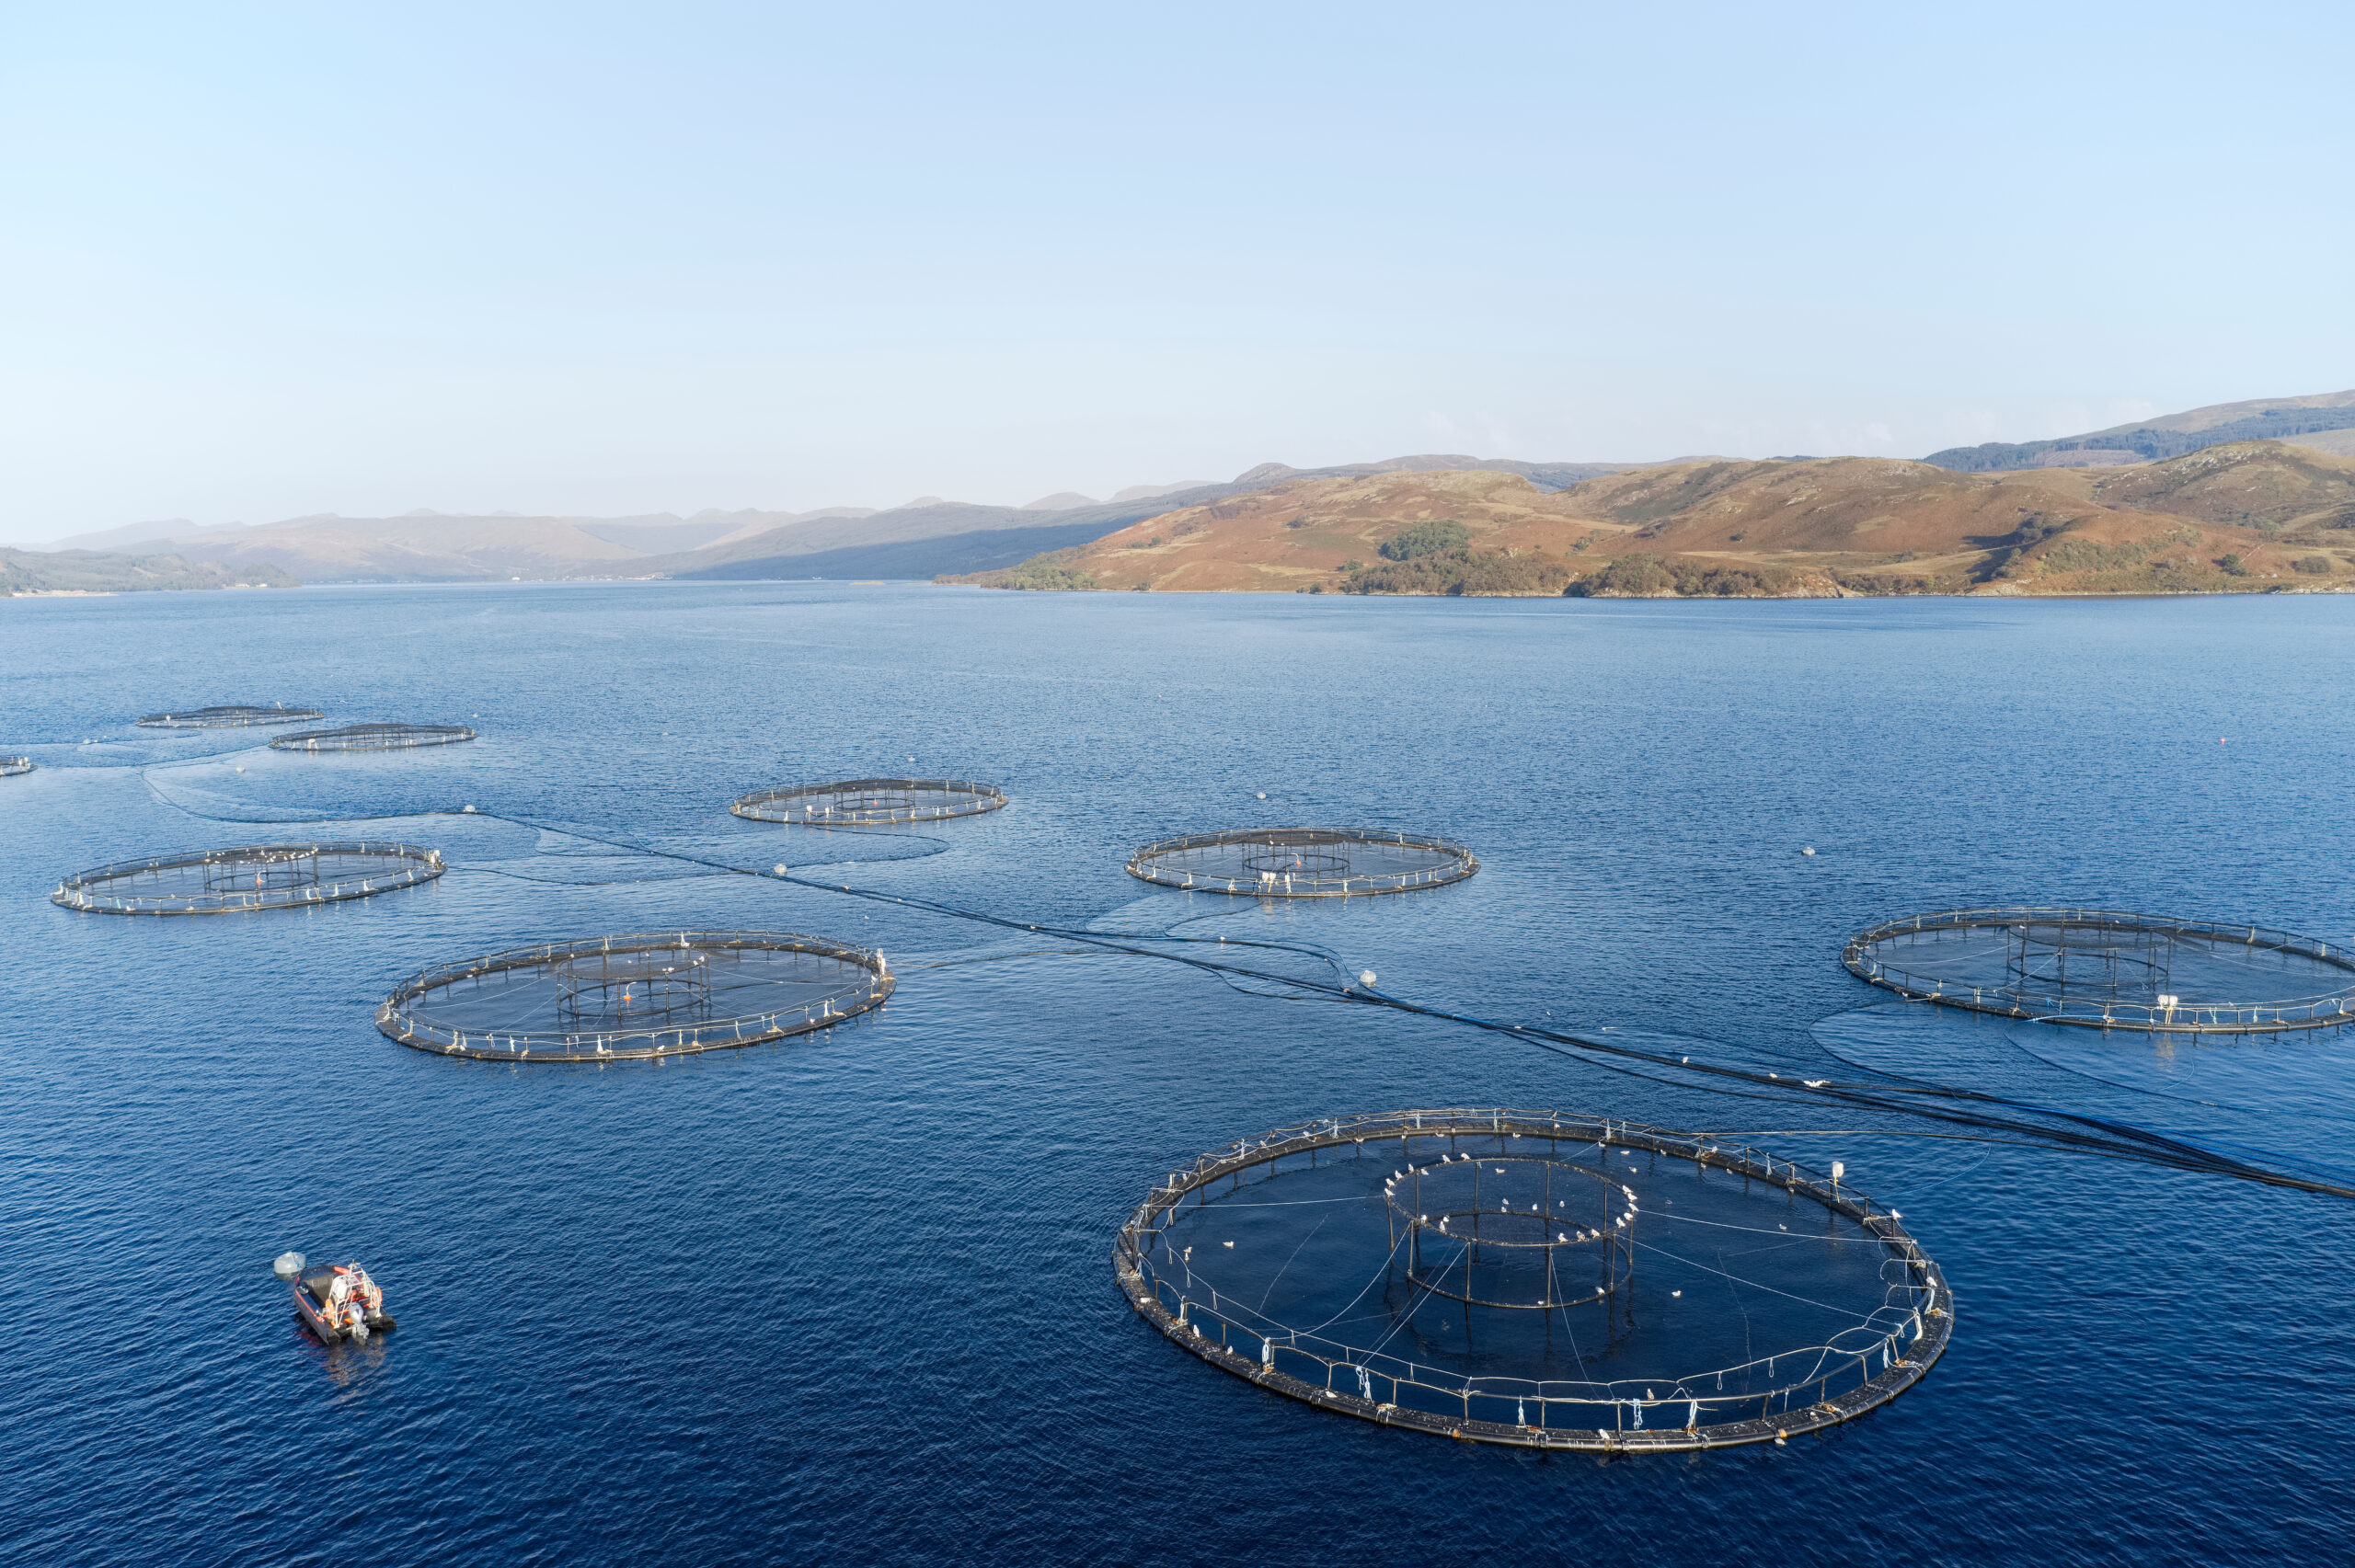 Fish farm salmon sea nets farming at sea Loch Tay Scotland UK